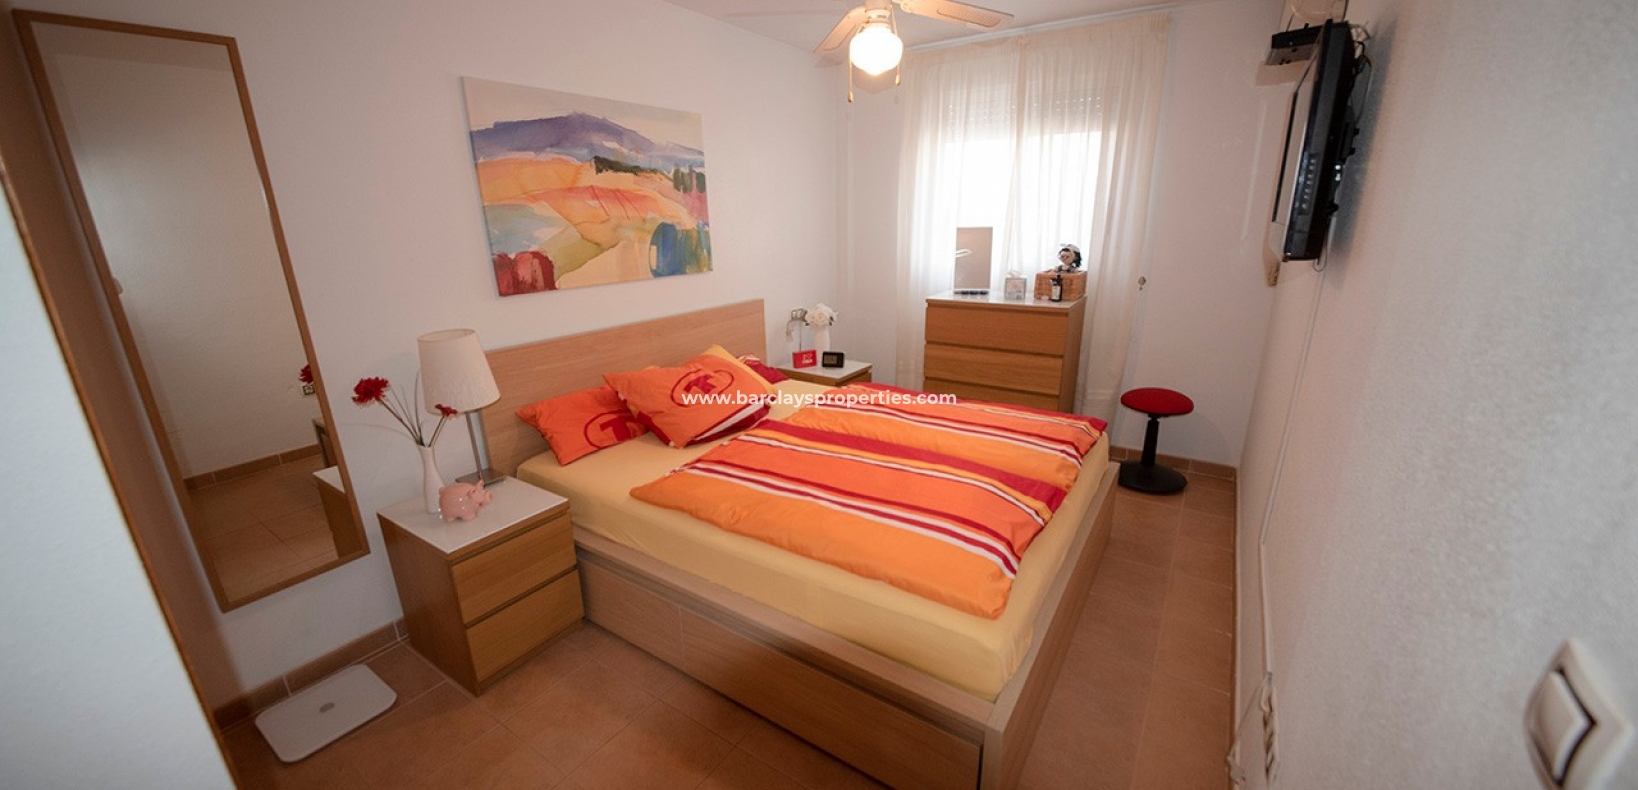 Herenhuis stijl woning te koop in La Marina Alicante Spanje - slaapkamer